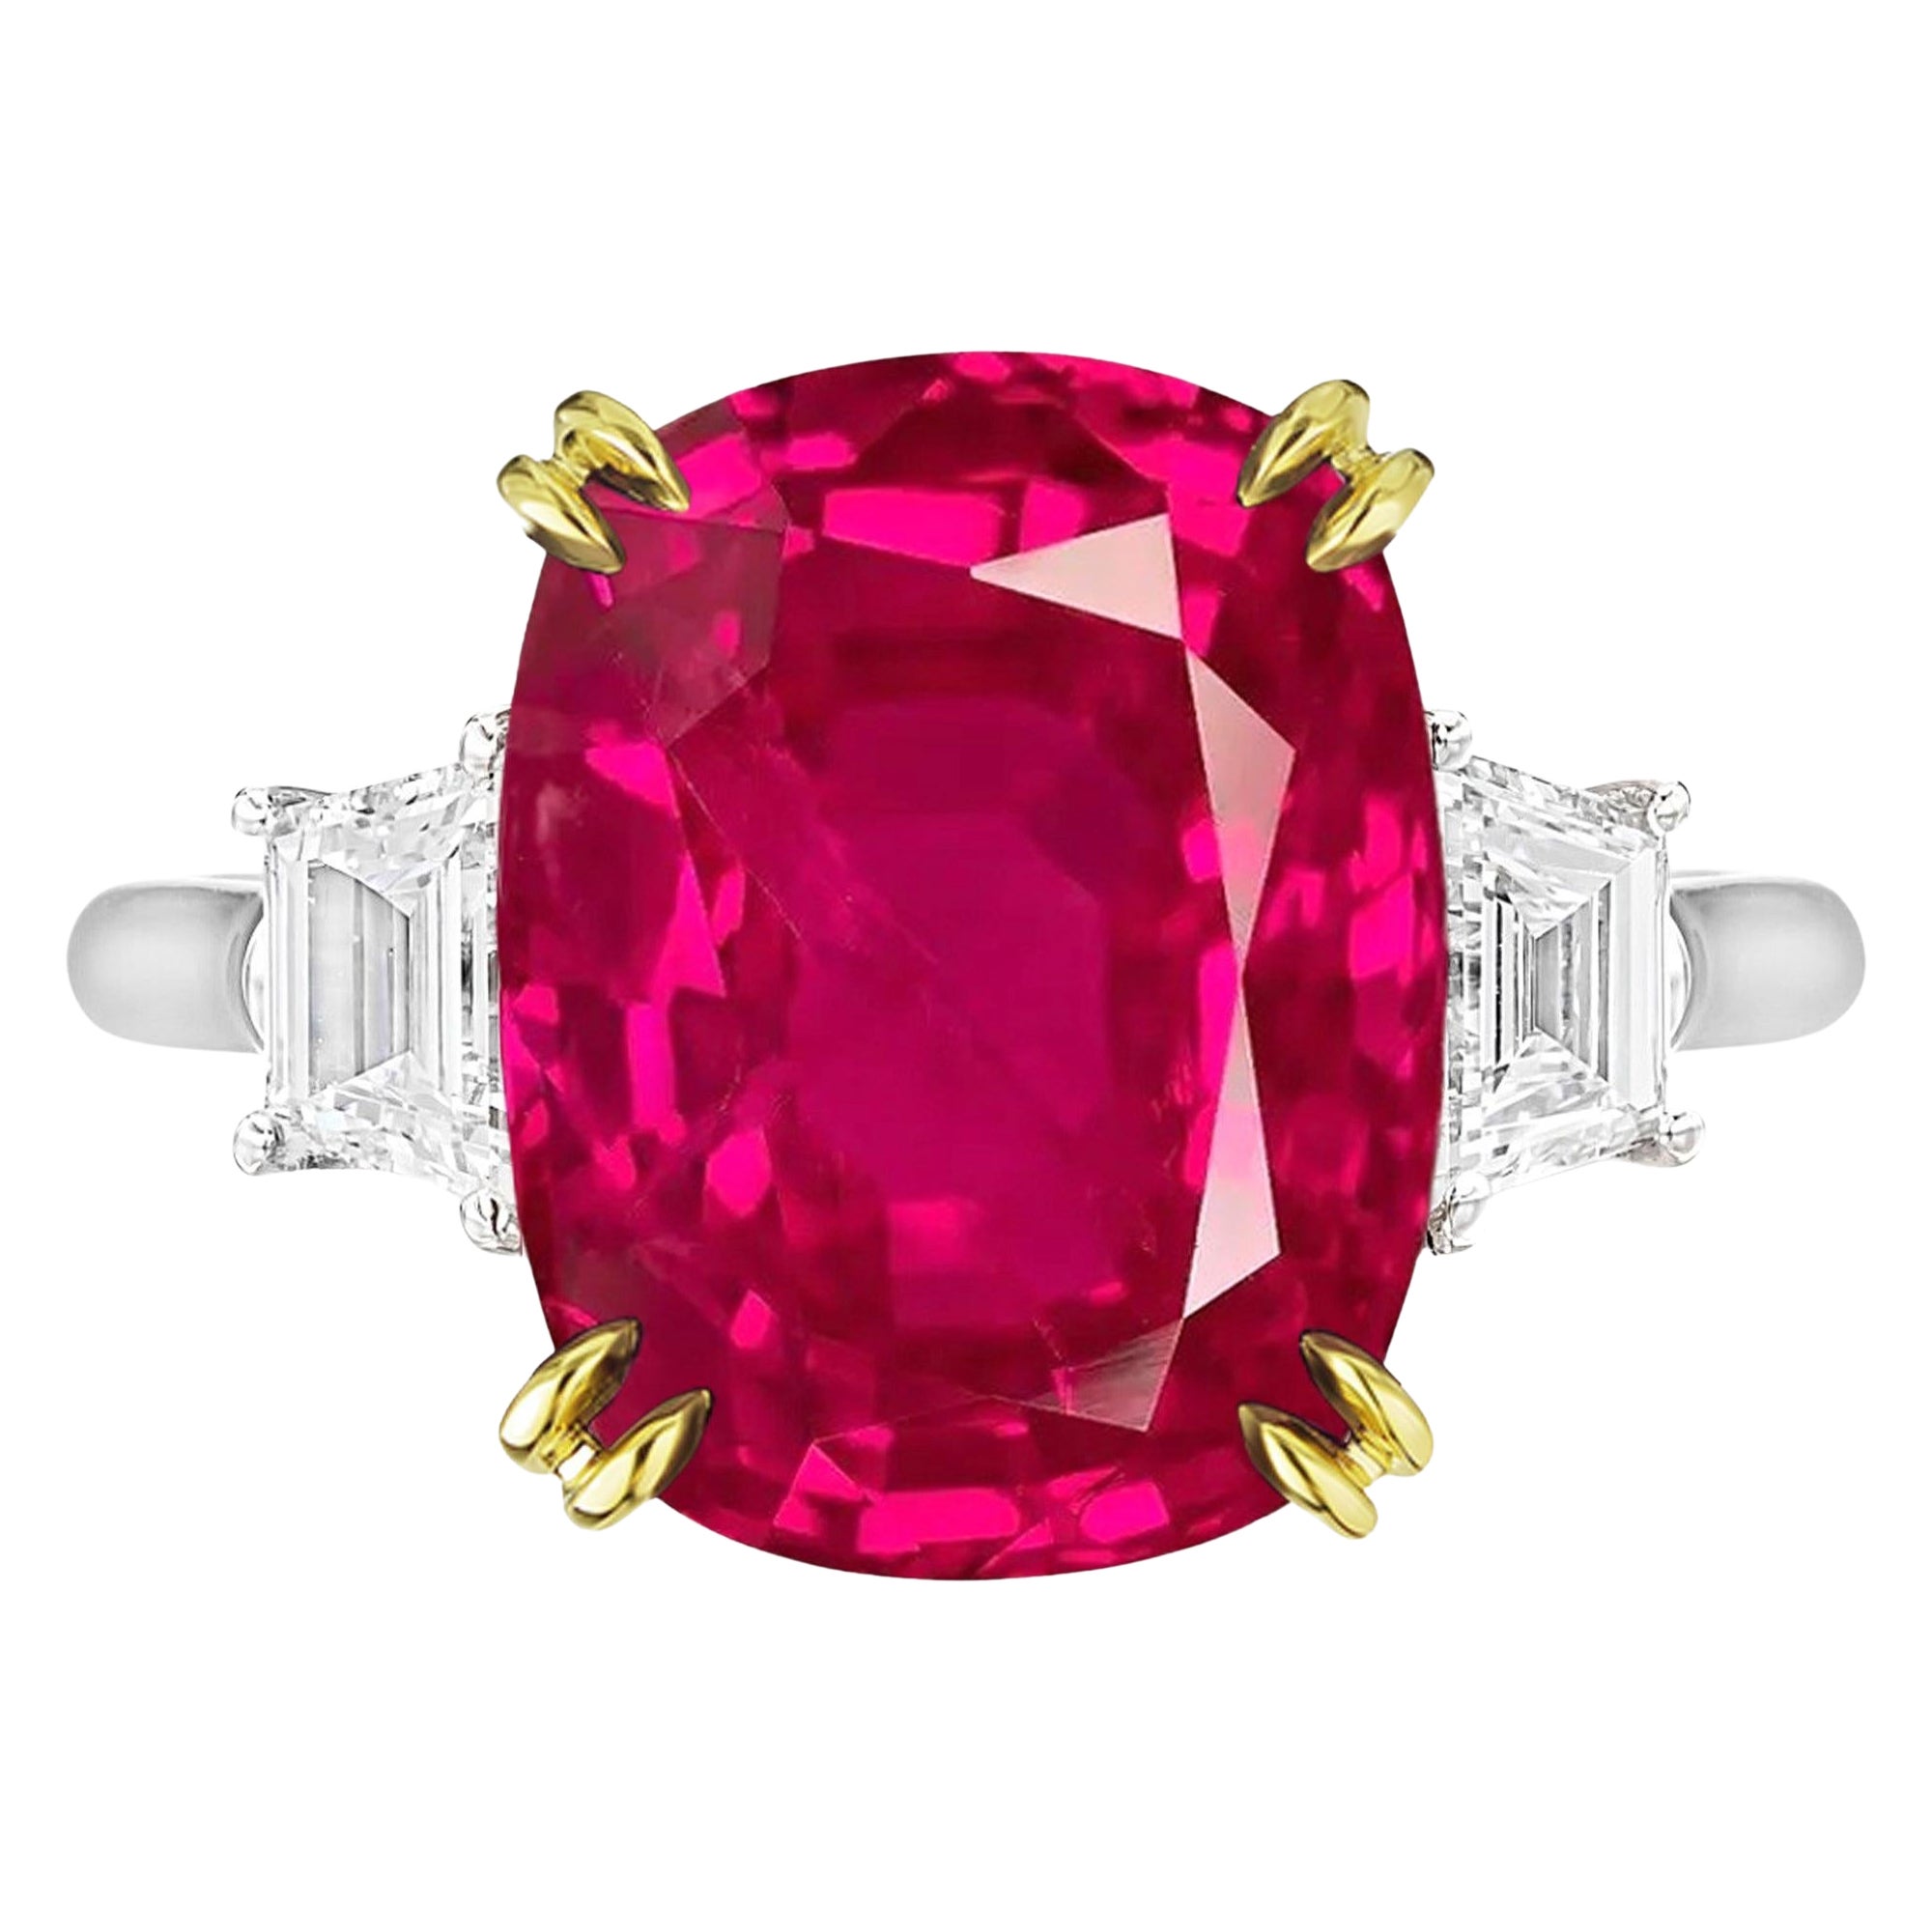 GRS No Heat Certified 5 Carat Ruby Cushion Diamond Ring